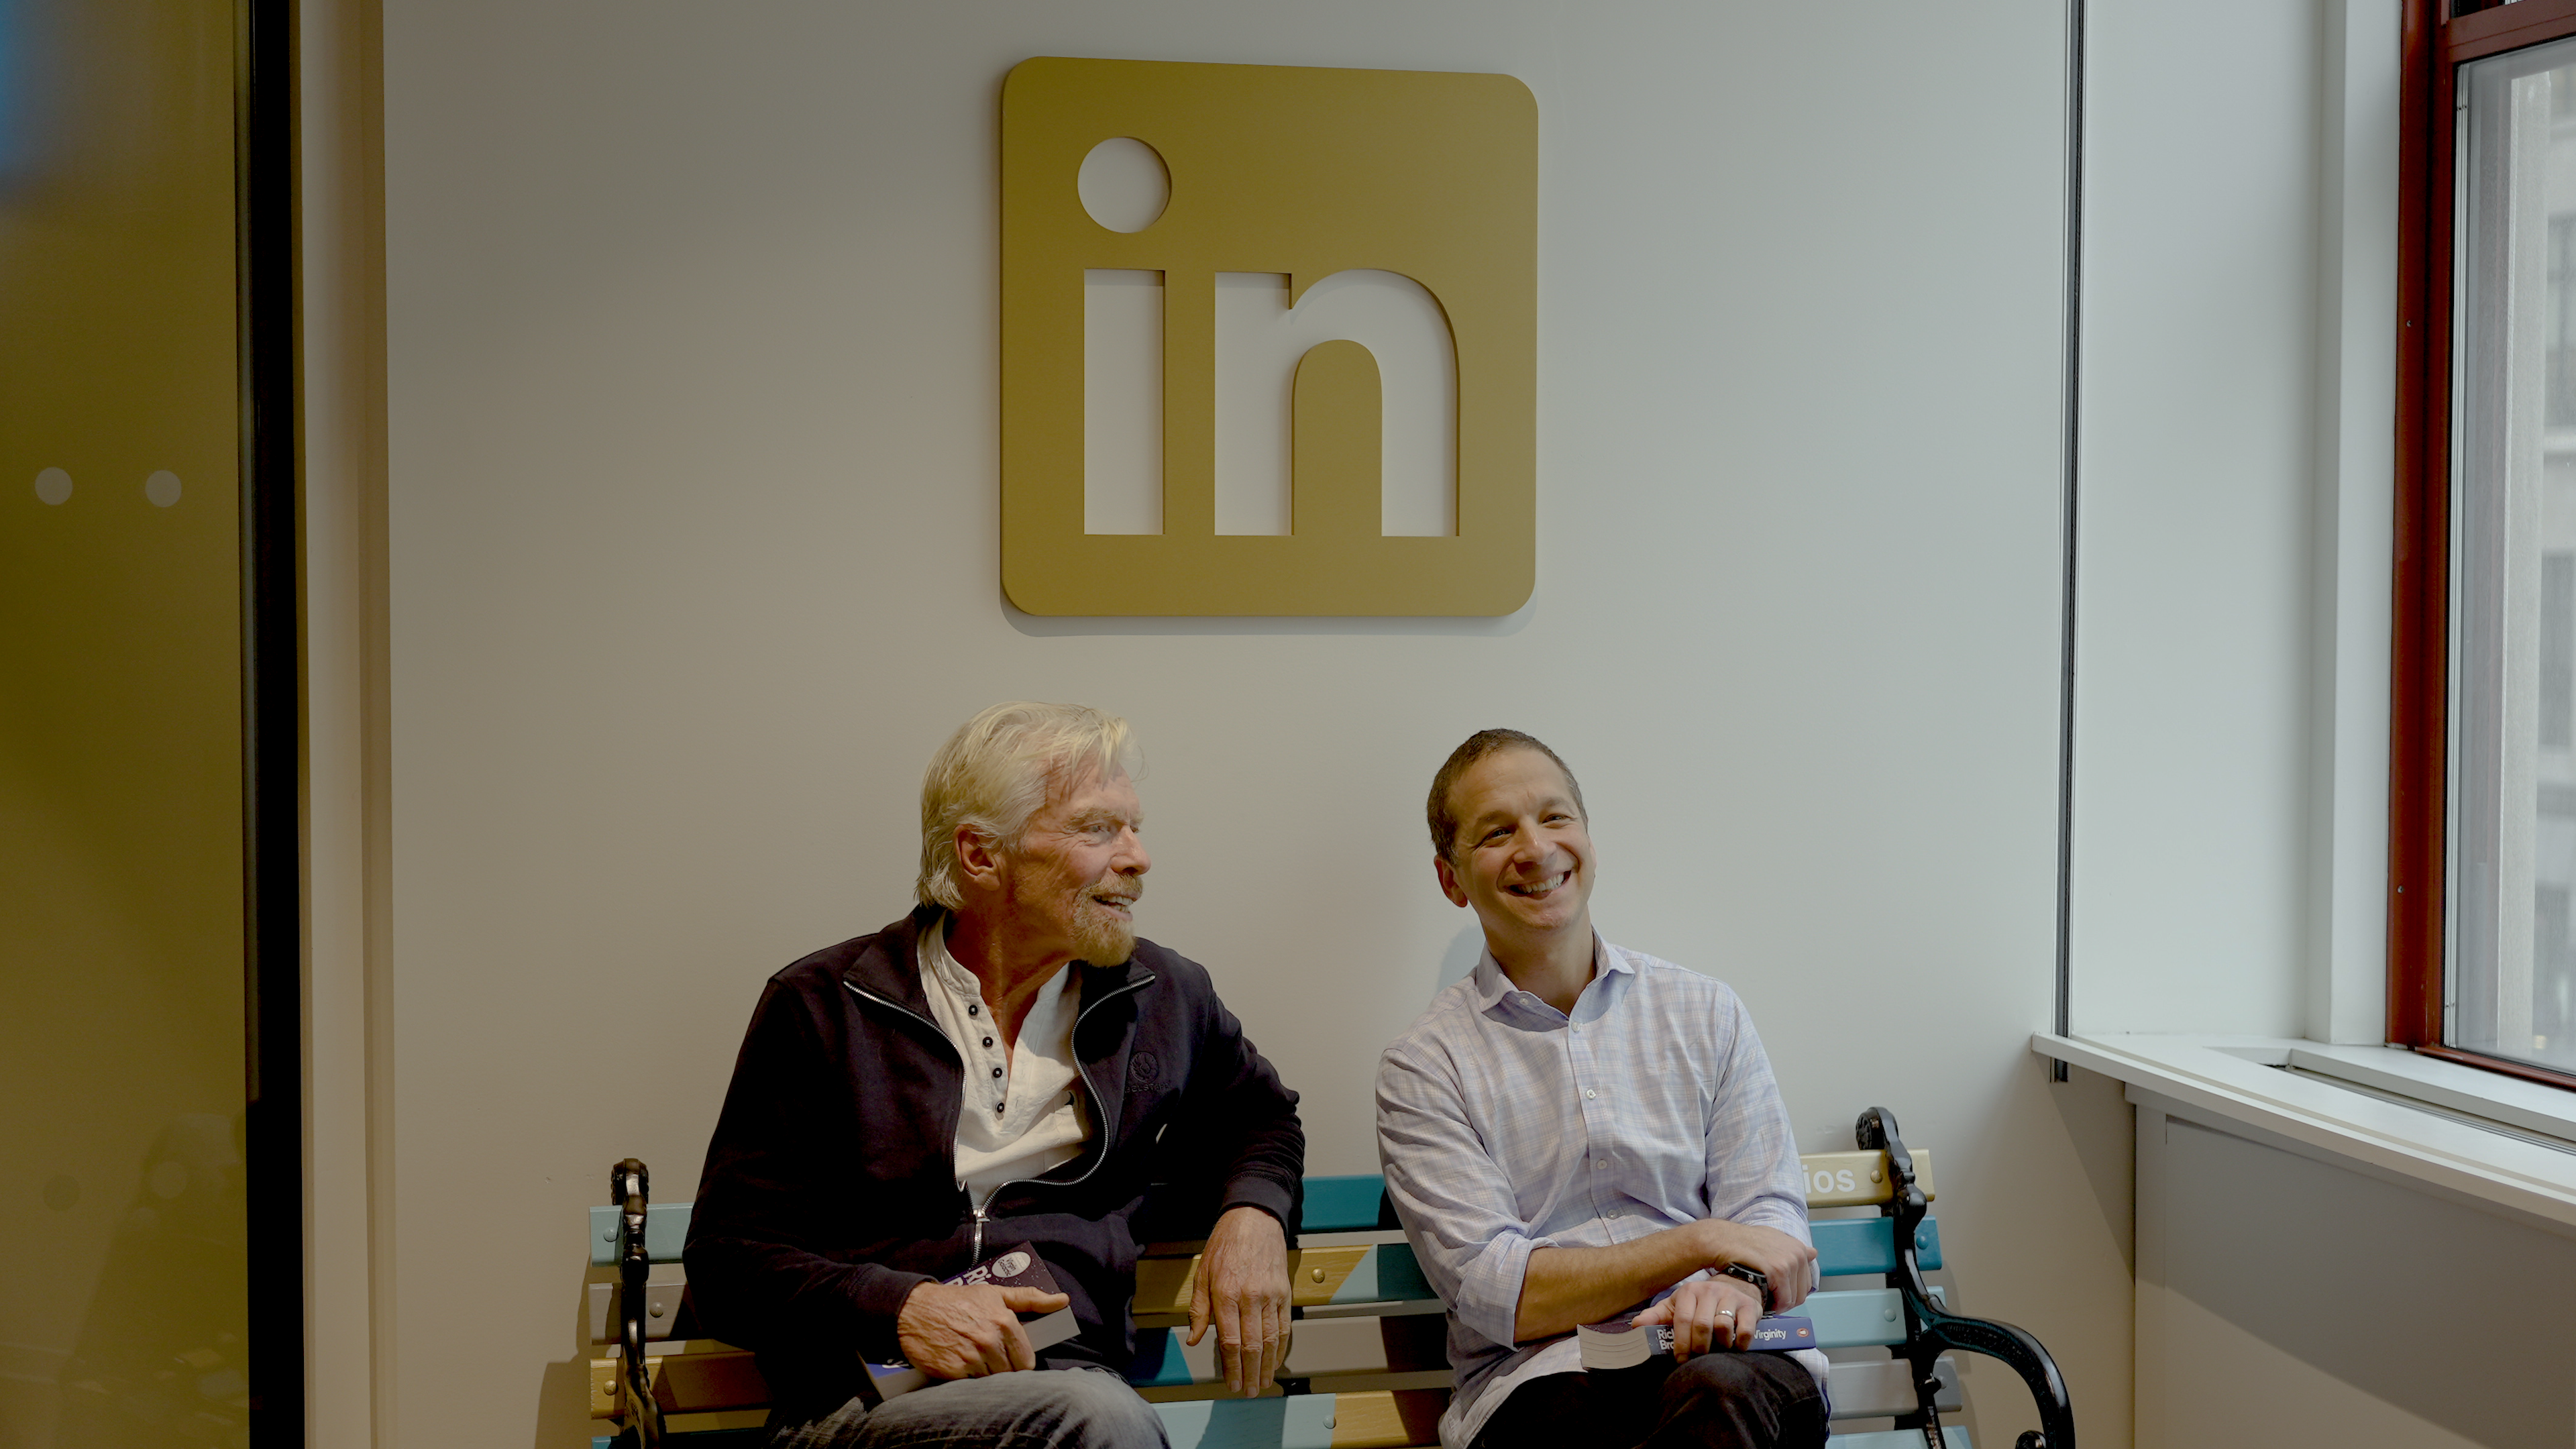 Richard Branson_2022_LinkedIn event with Dan Roth in New York City